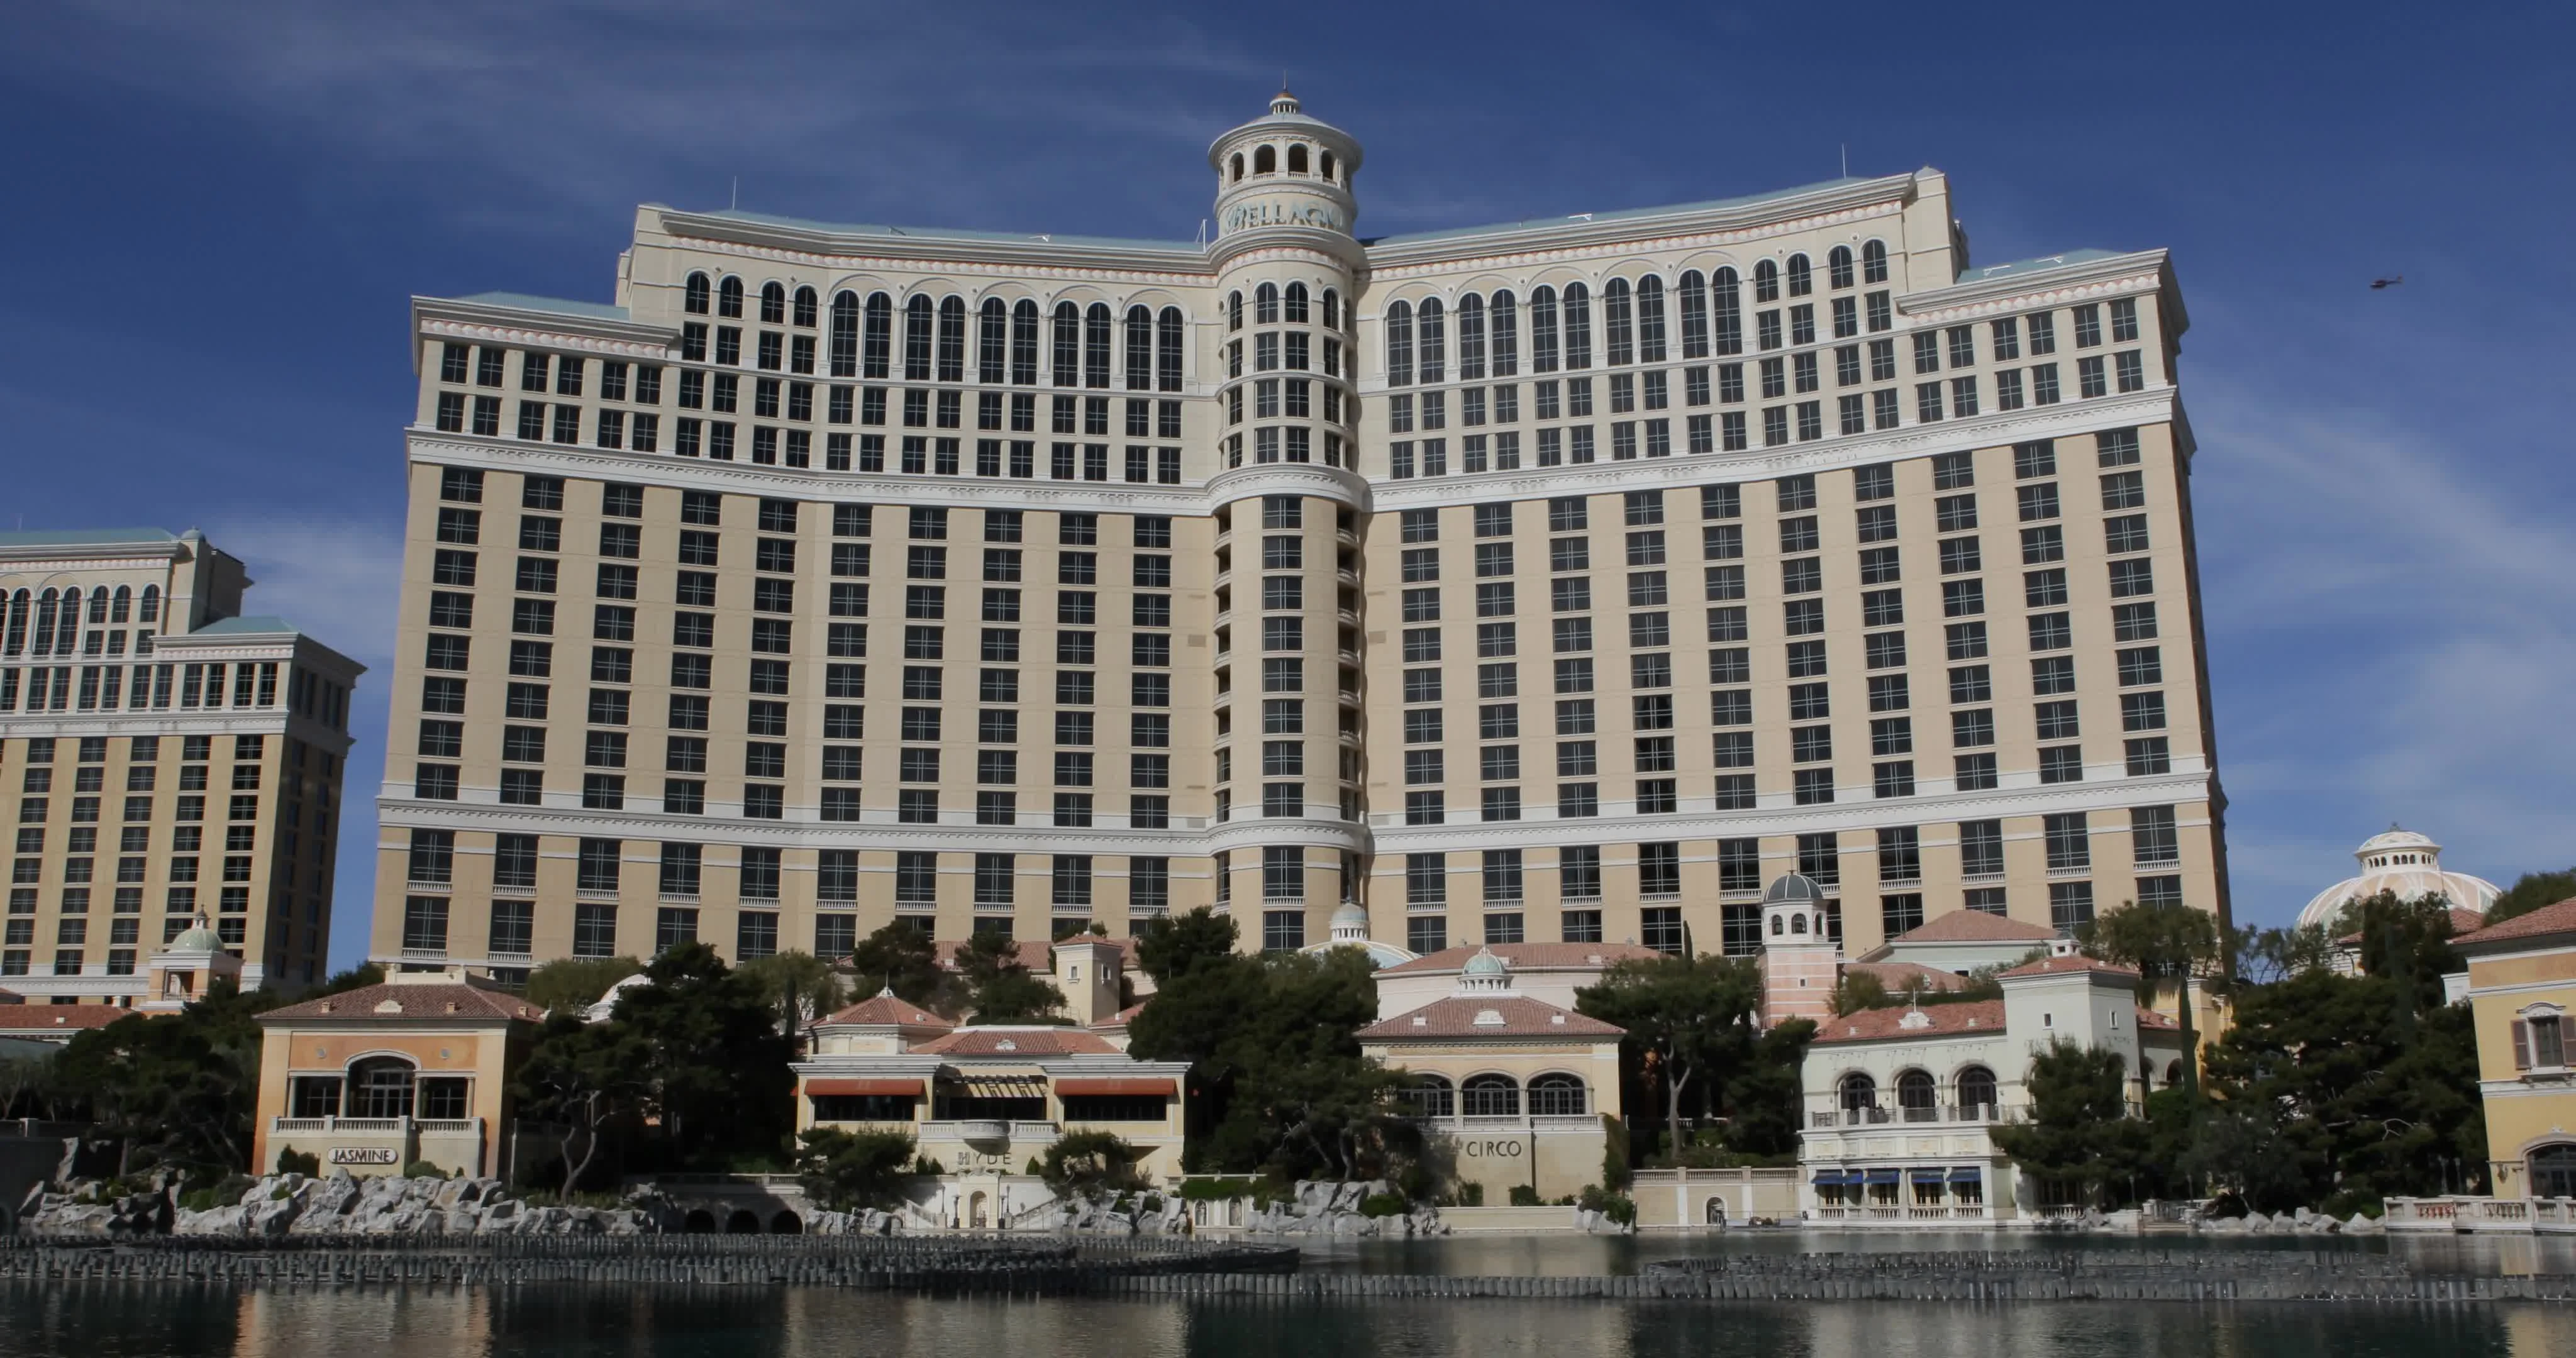 Hotel Bellagio with artificial lake, casino, luxury hotel, Las